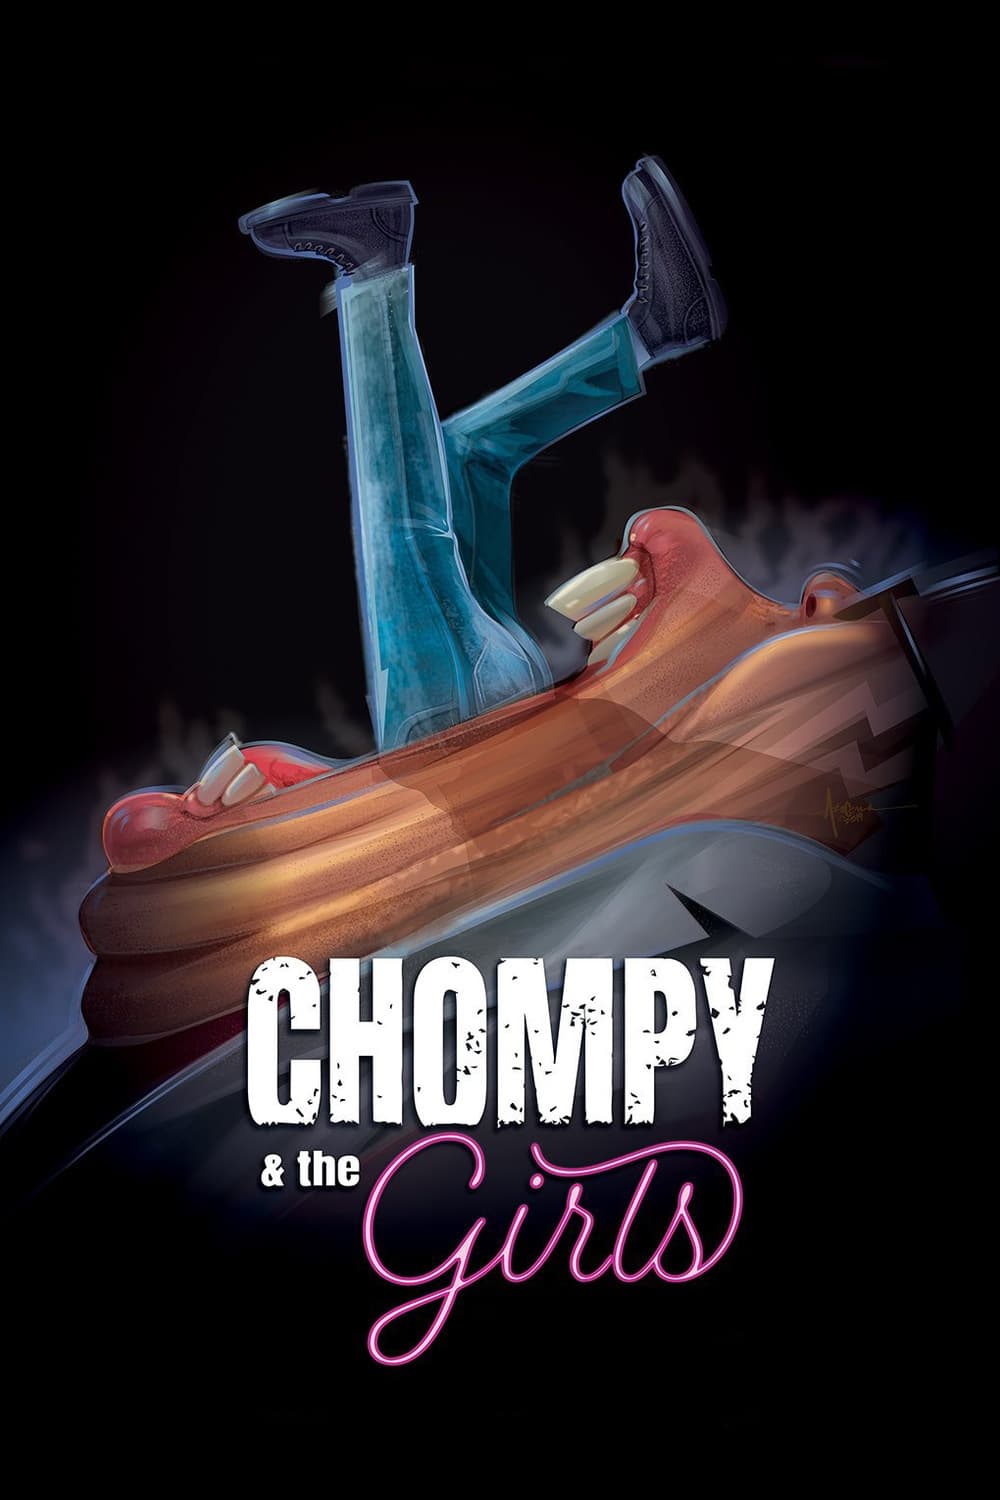 Chompy & the Girls